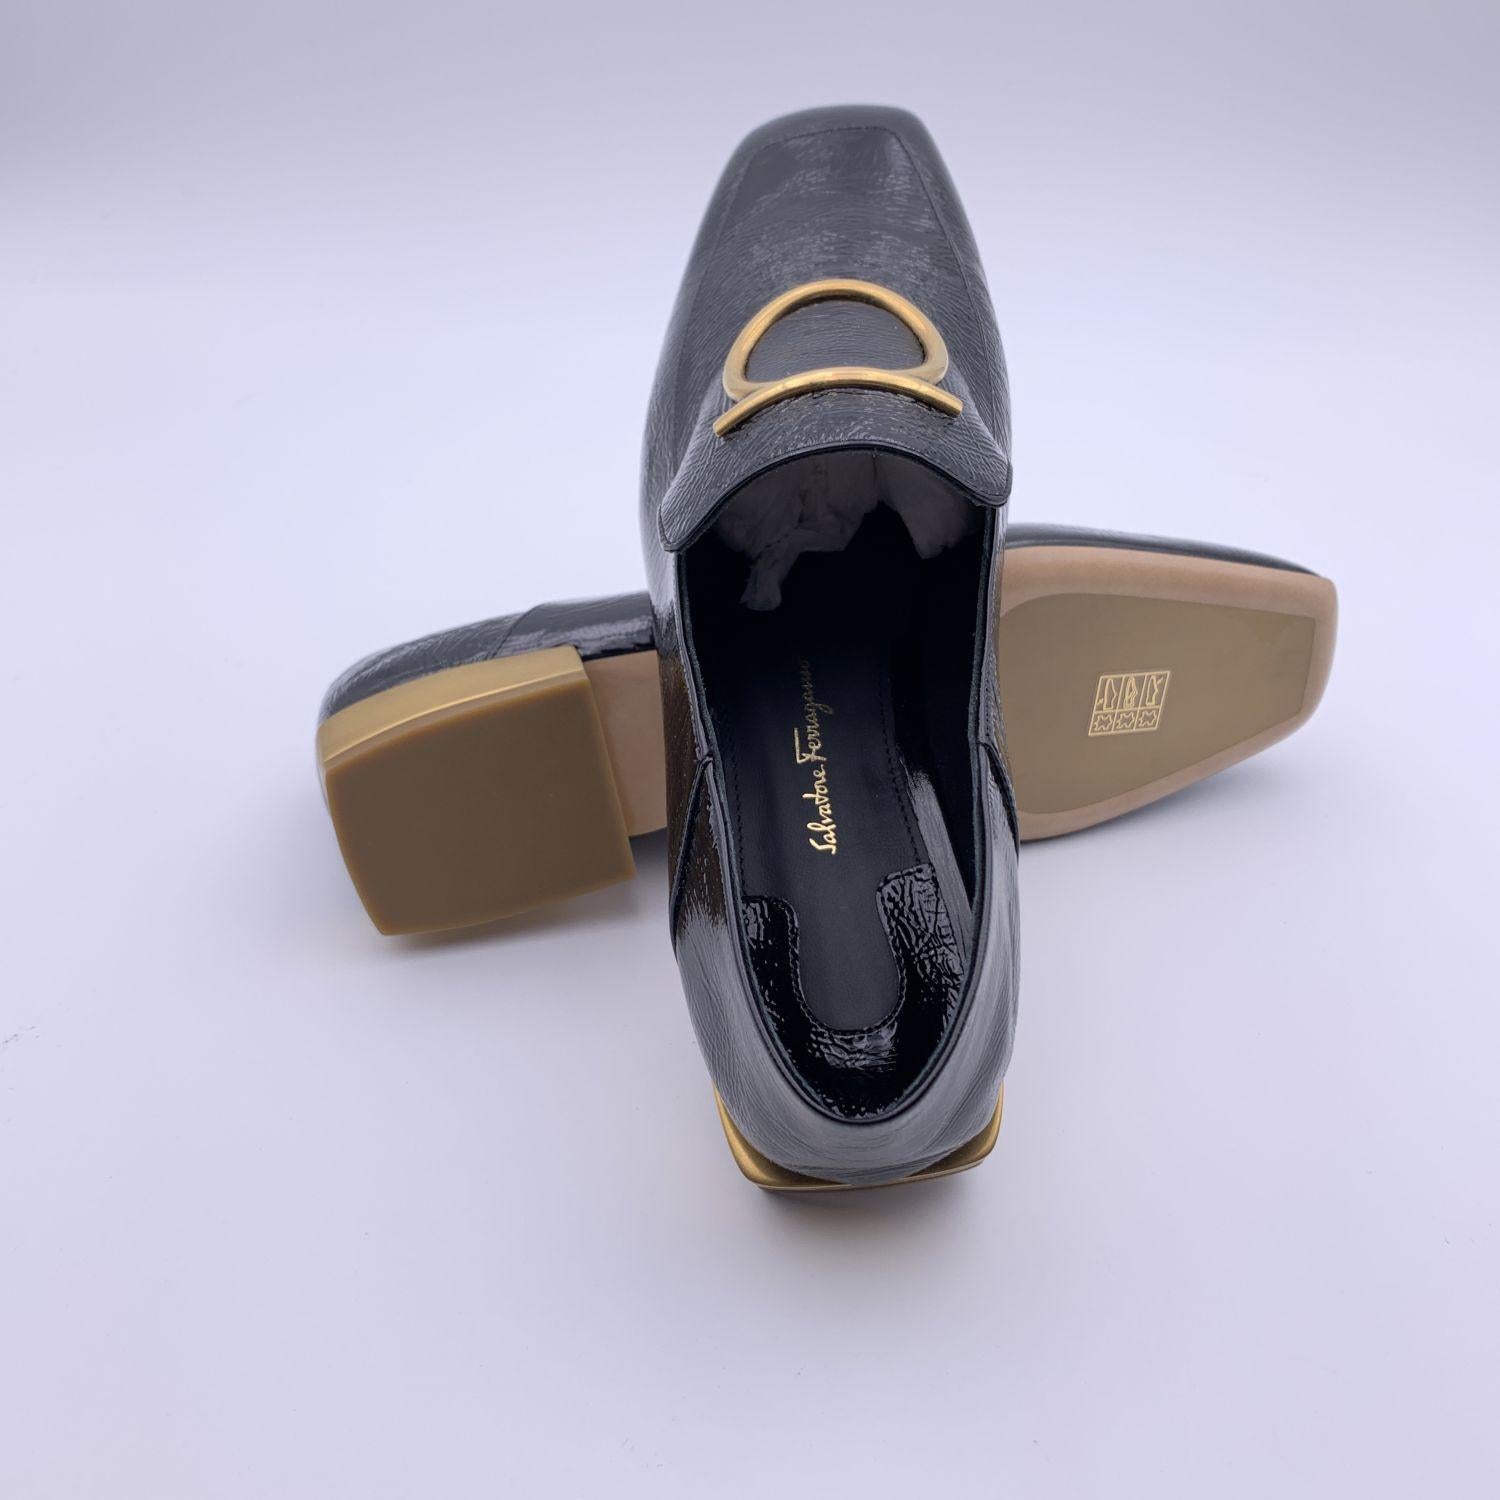 Salvatore Ferragamo Black Patent Leather Lana Loafers Size 7C 37.5 C 1